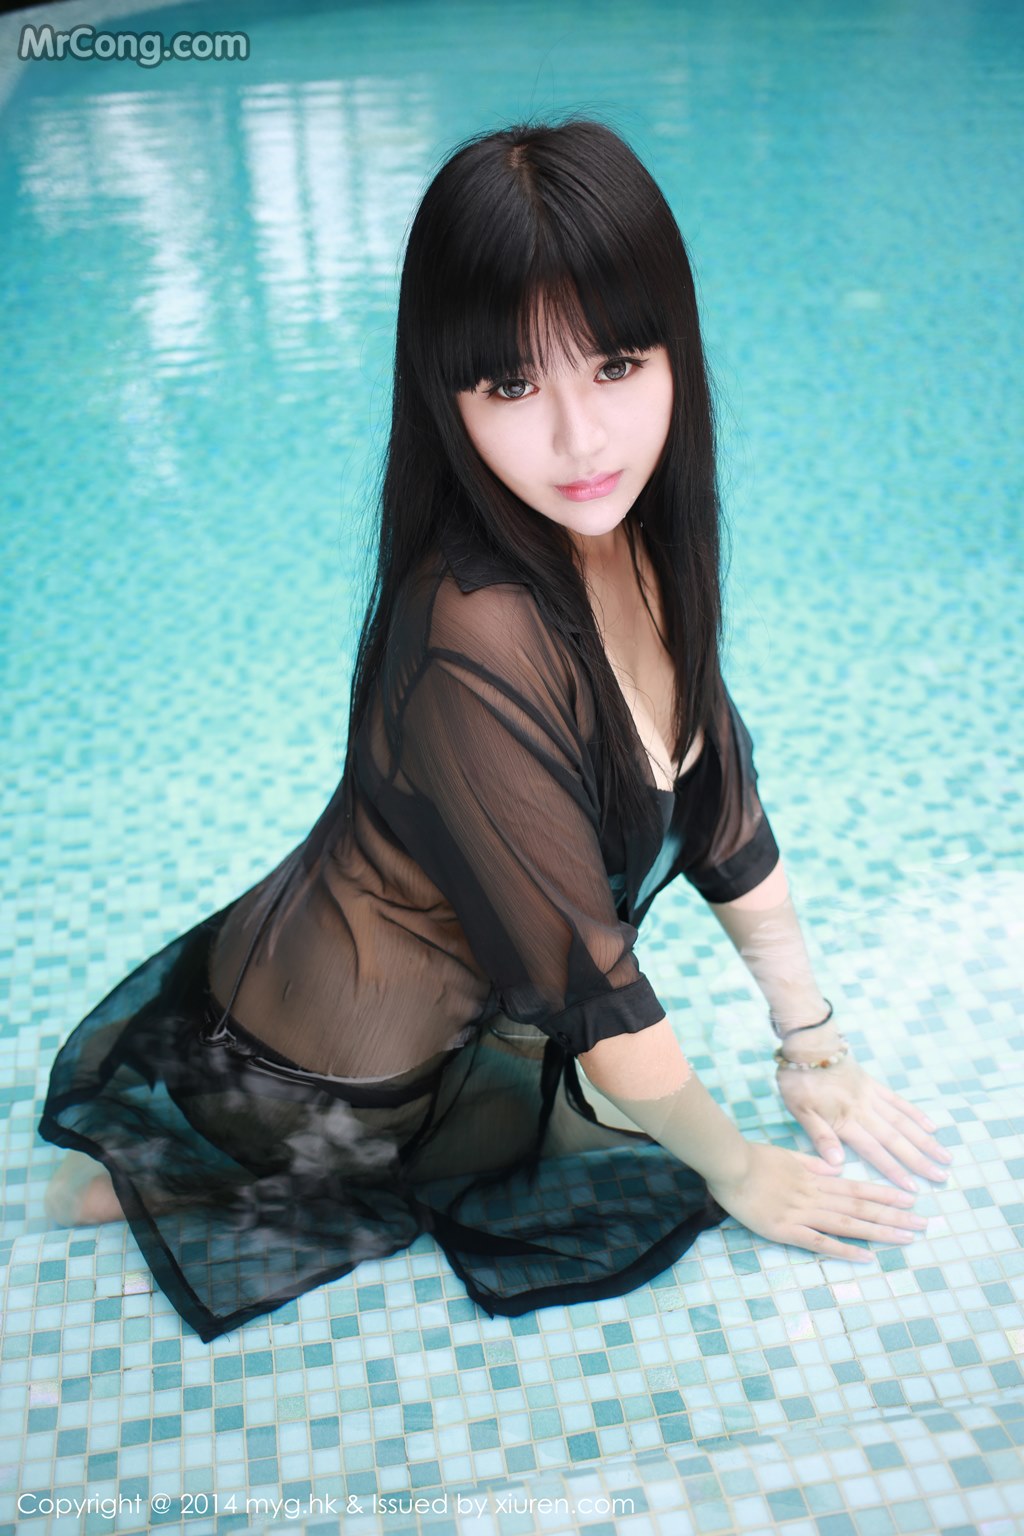 MyGirl Vol.022: Model Ba Bao icey (八宝 icey) (66 pictures) photo 3-16